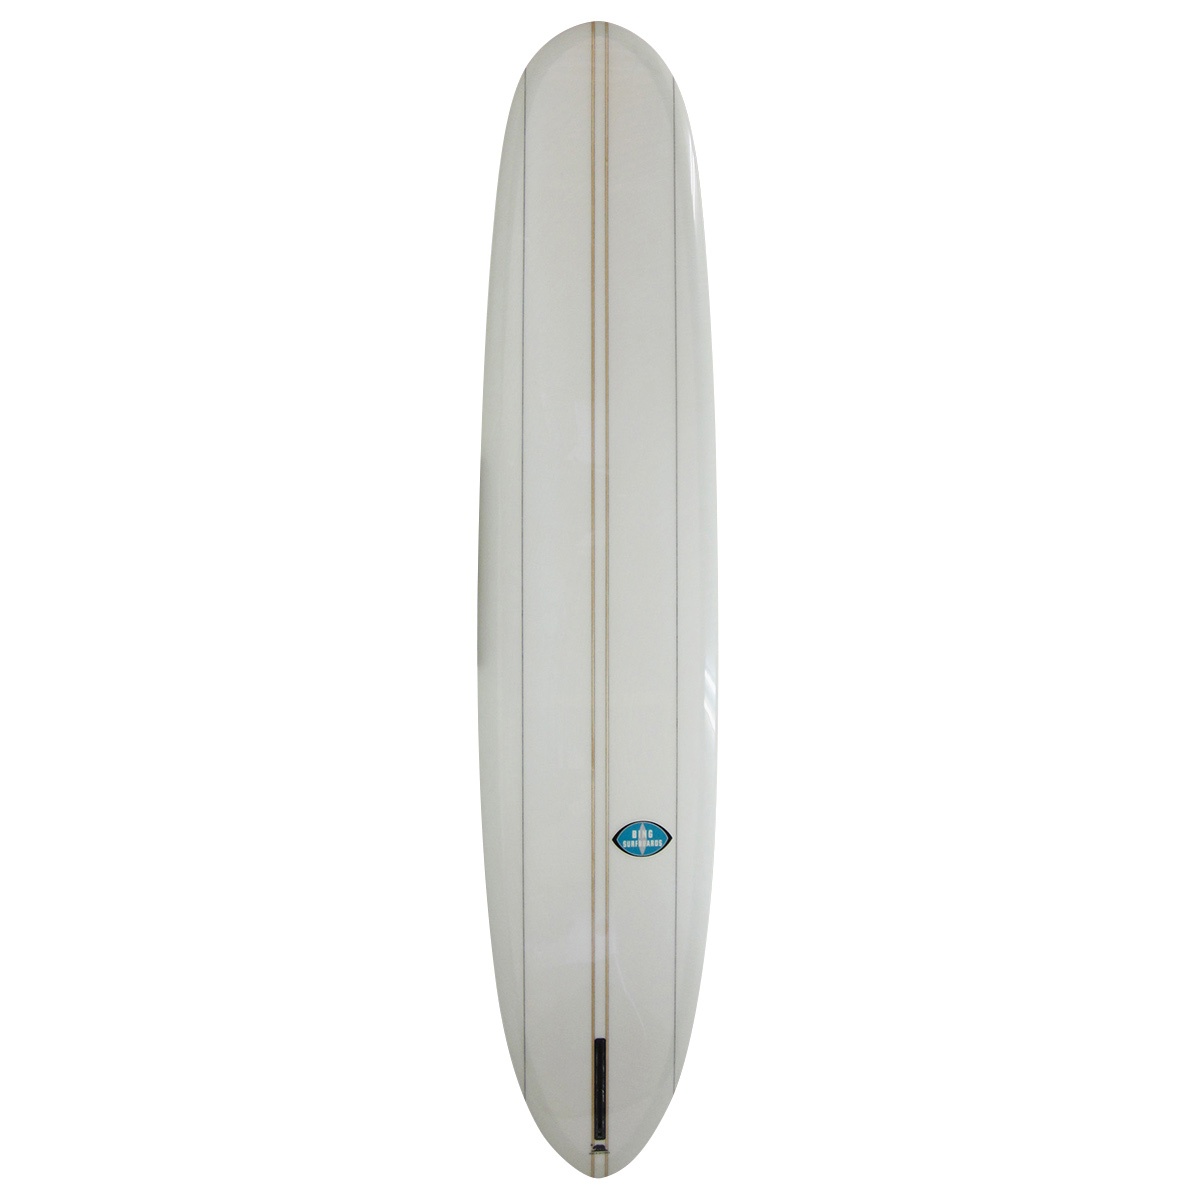 BING SURFBOARDS : California Pin Tail